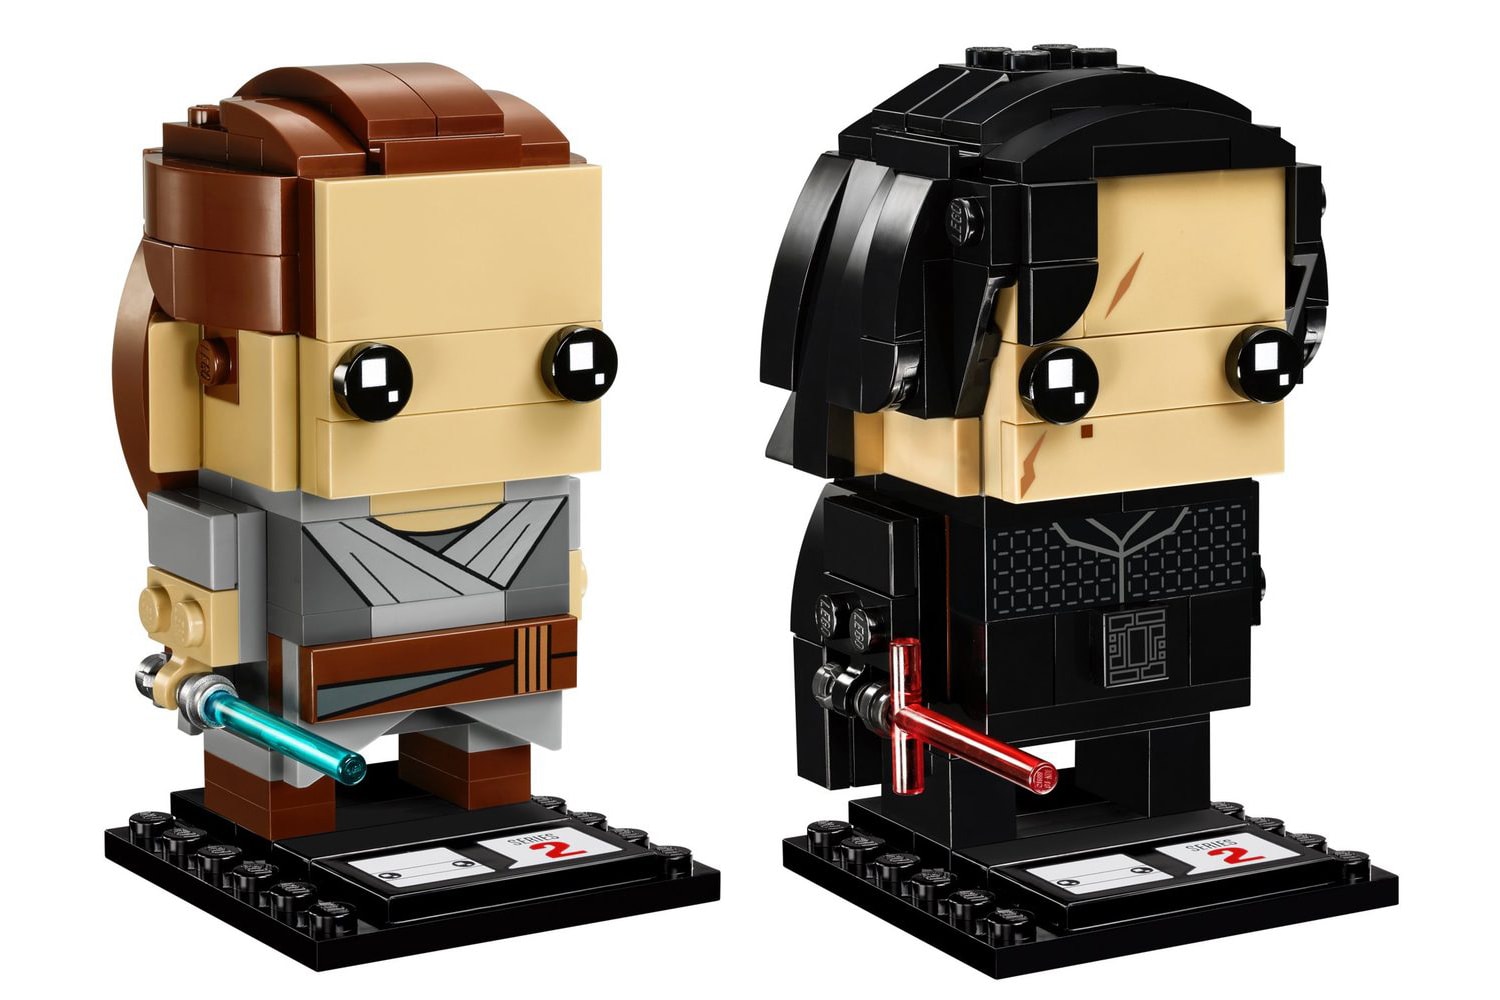 LEGO 推出全新《Star Wars: The Last Jedi》Rey 及 Kylo Ren「Brickheadz」積木人偶系列